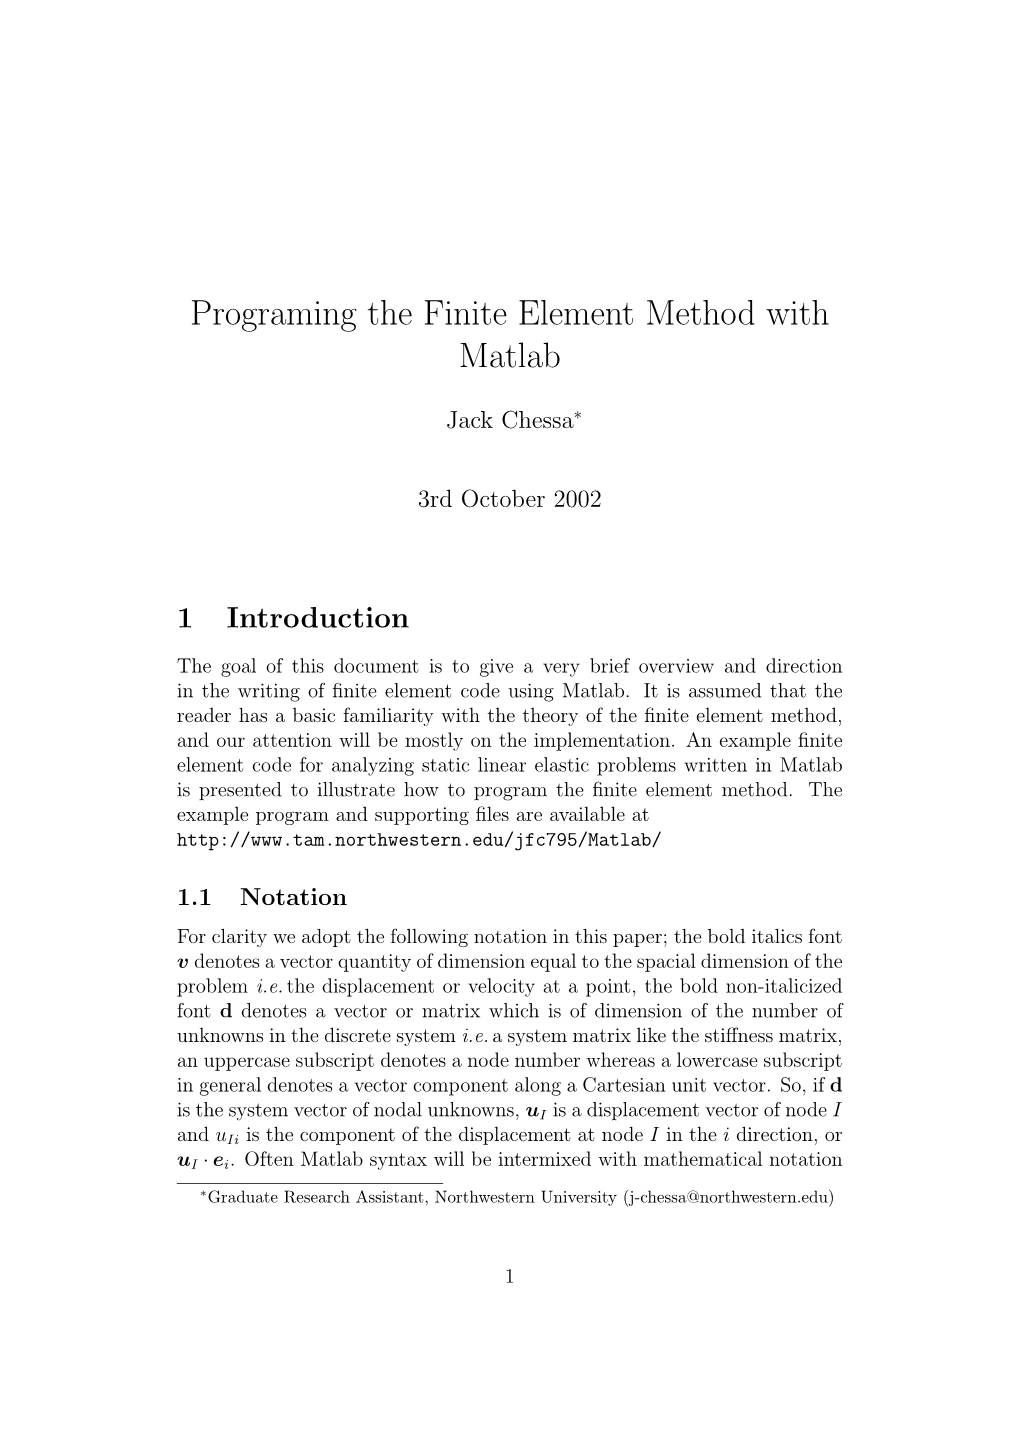 Programing the Finite Element Method with Matlab